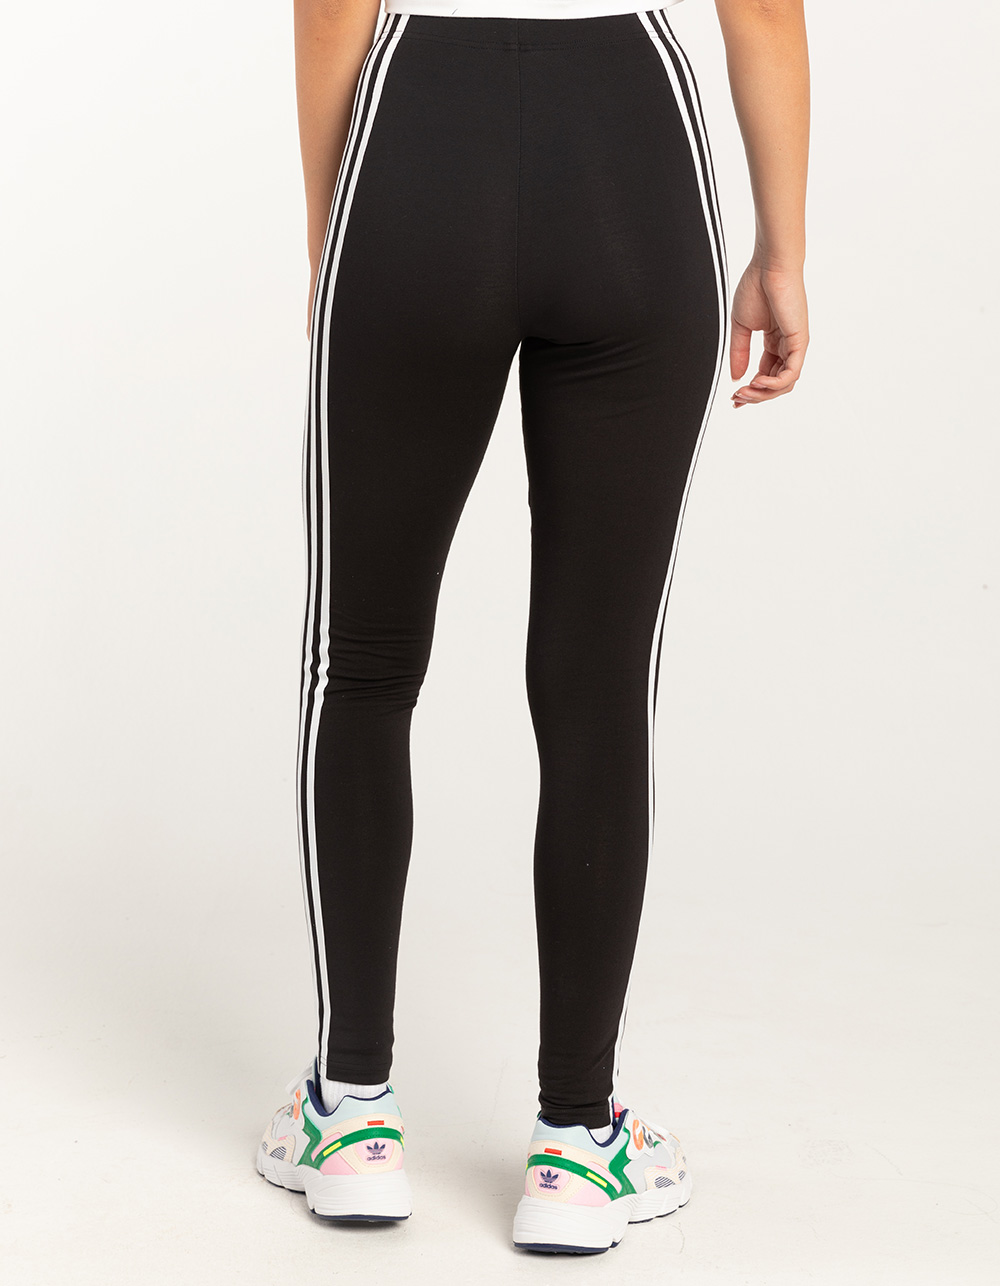 Women's Clothing - Future Icons 3-Stripes Leggings - Black